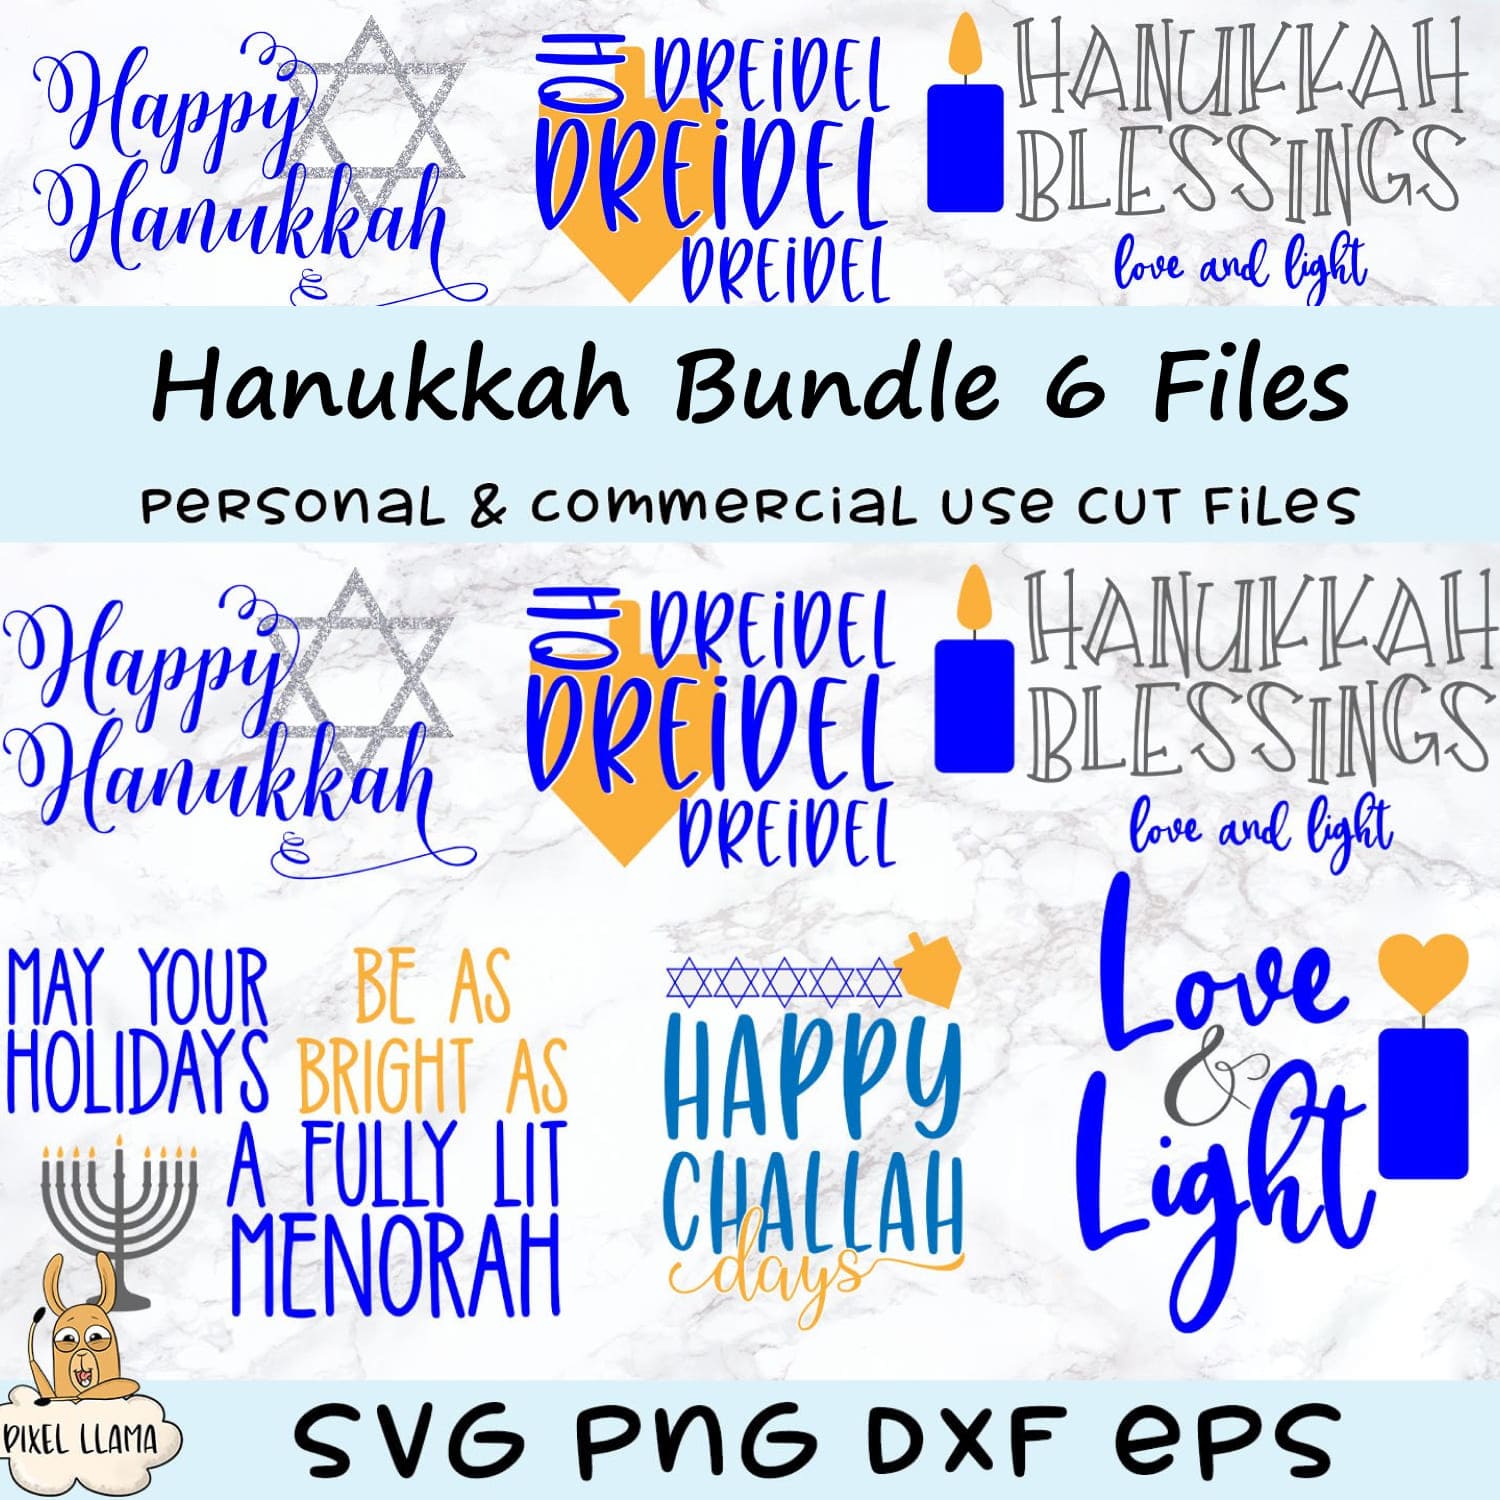 Hanukkah Bundle 6 Files SVG Cut File.